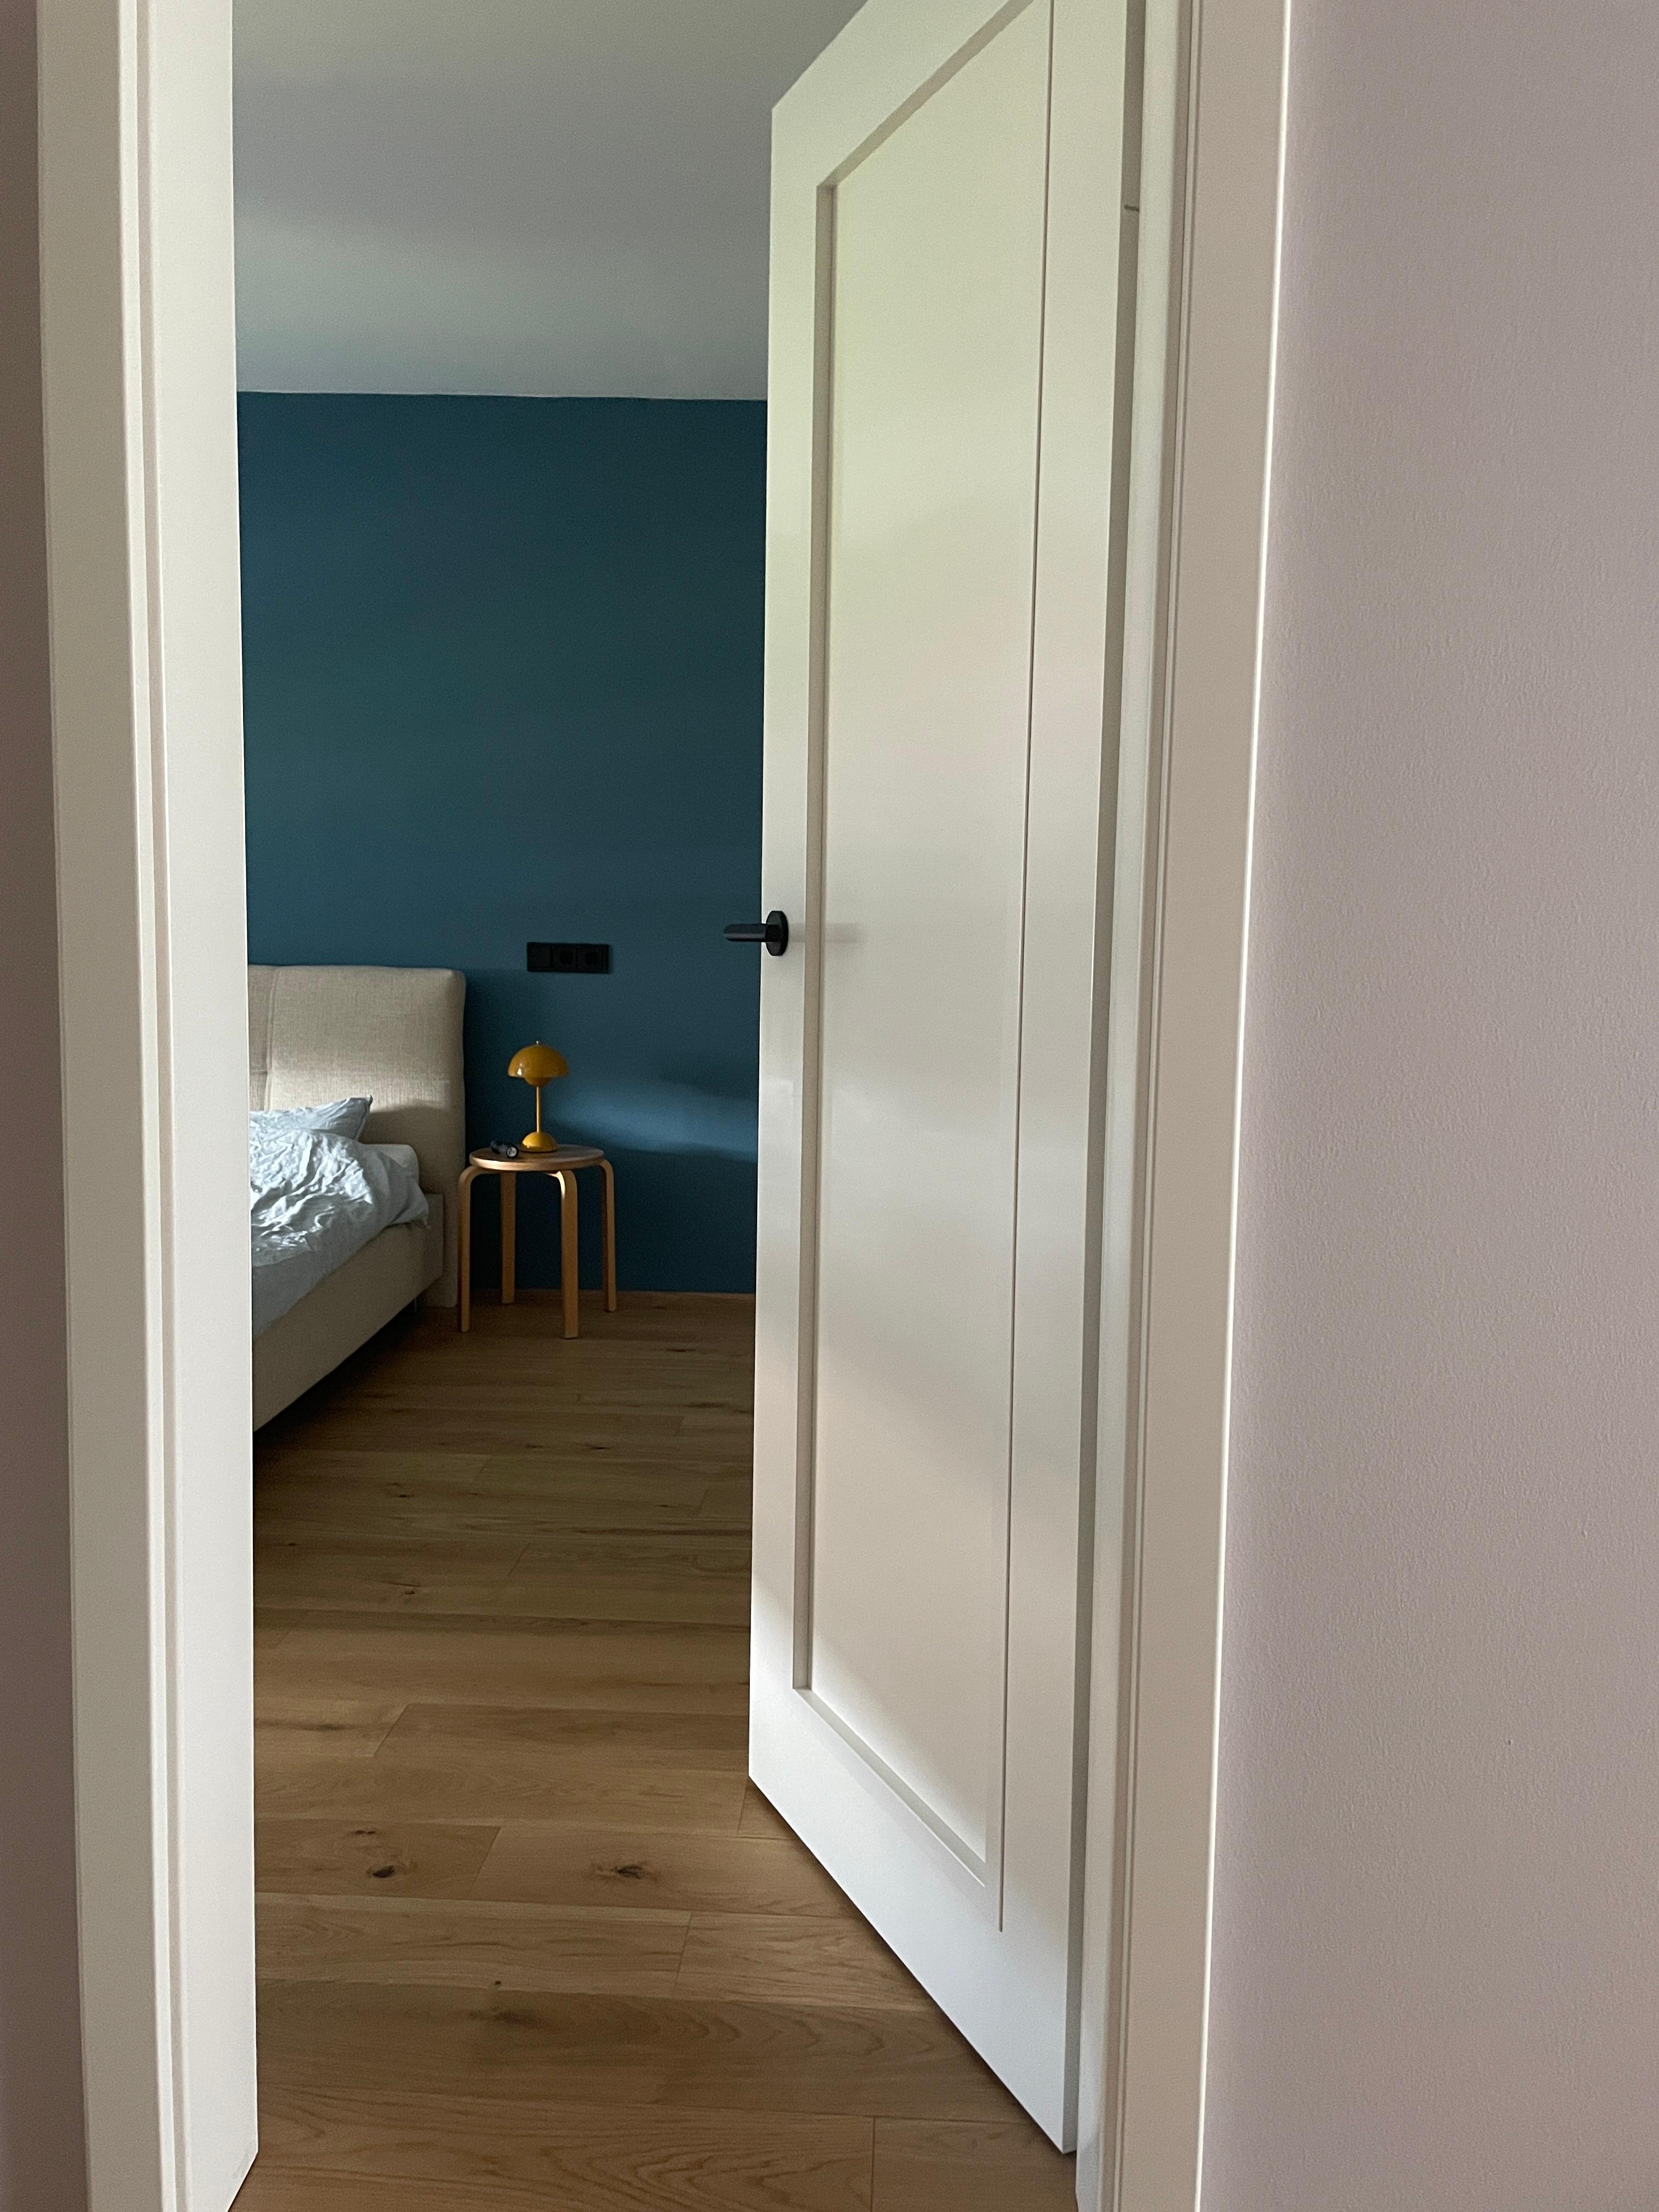 Private insight 

#schlafzimmer #bedroom #bluewalls #minimalism #japandi